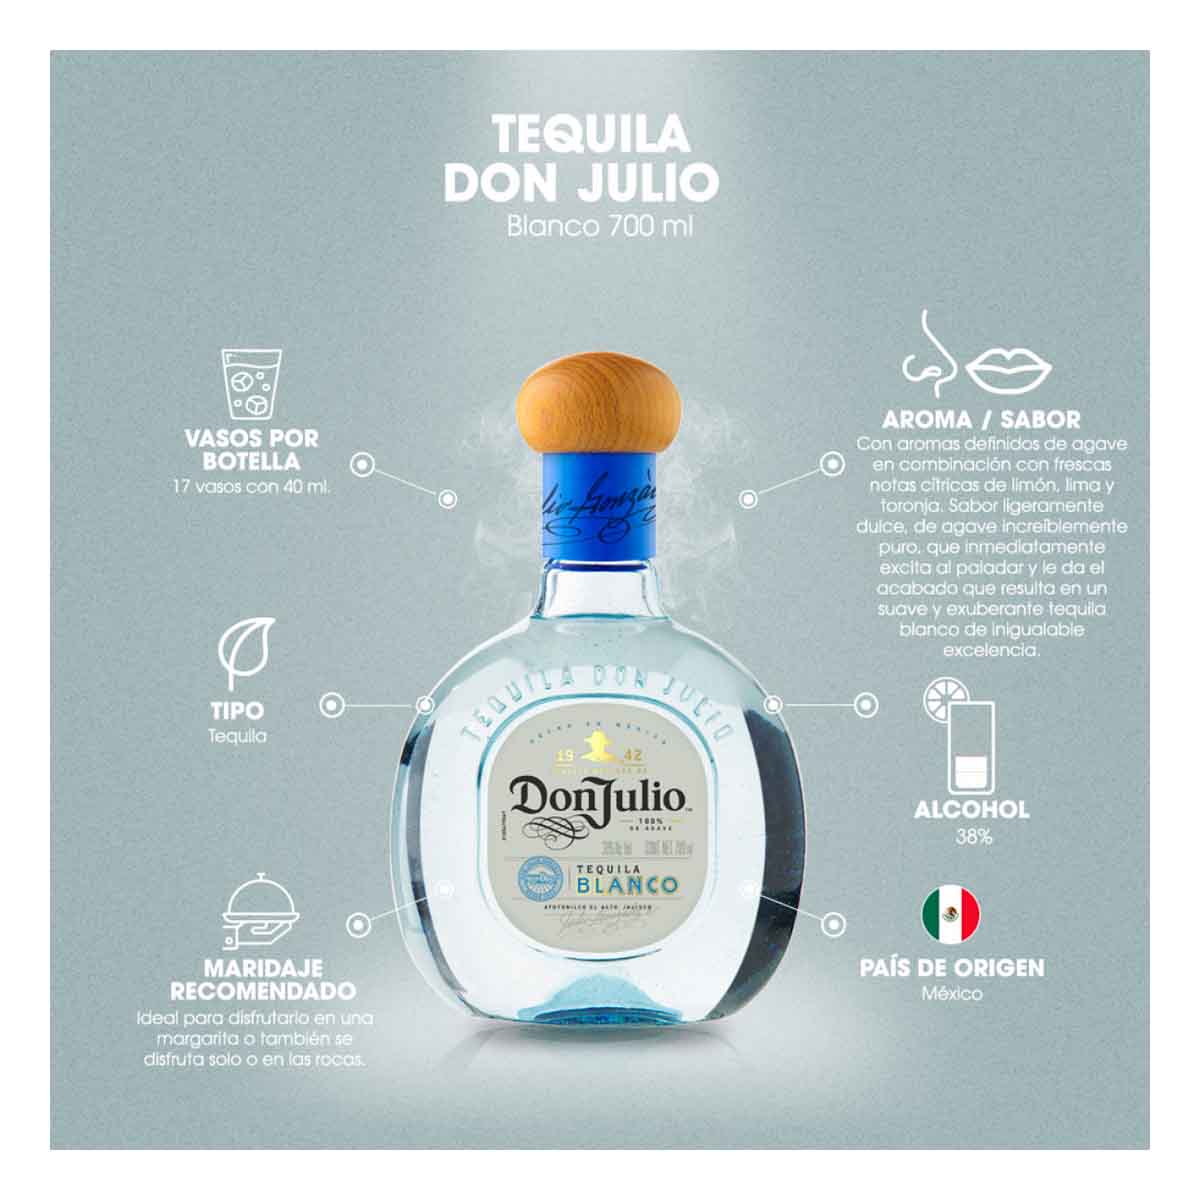 Tequila Don Julio Blanco 700 ml